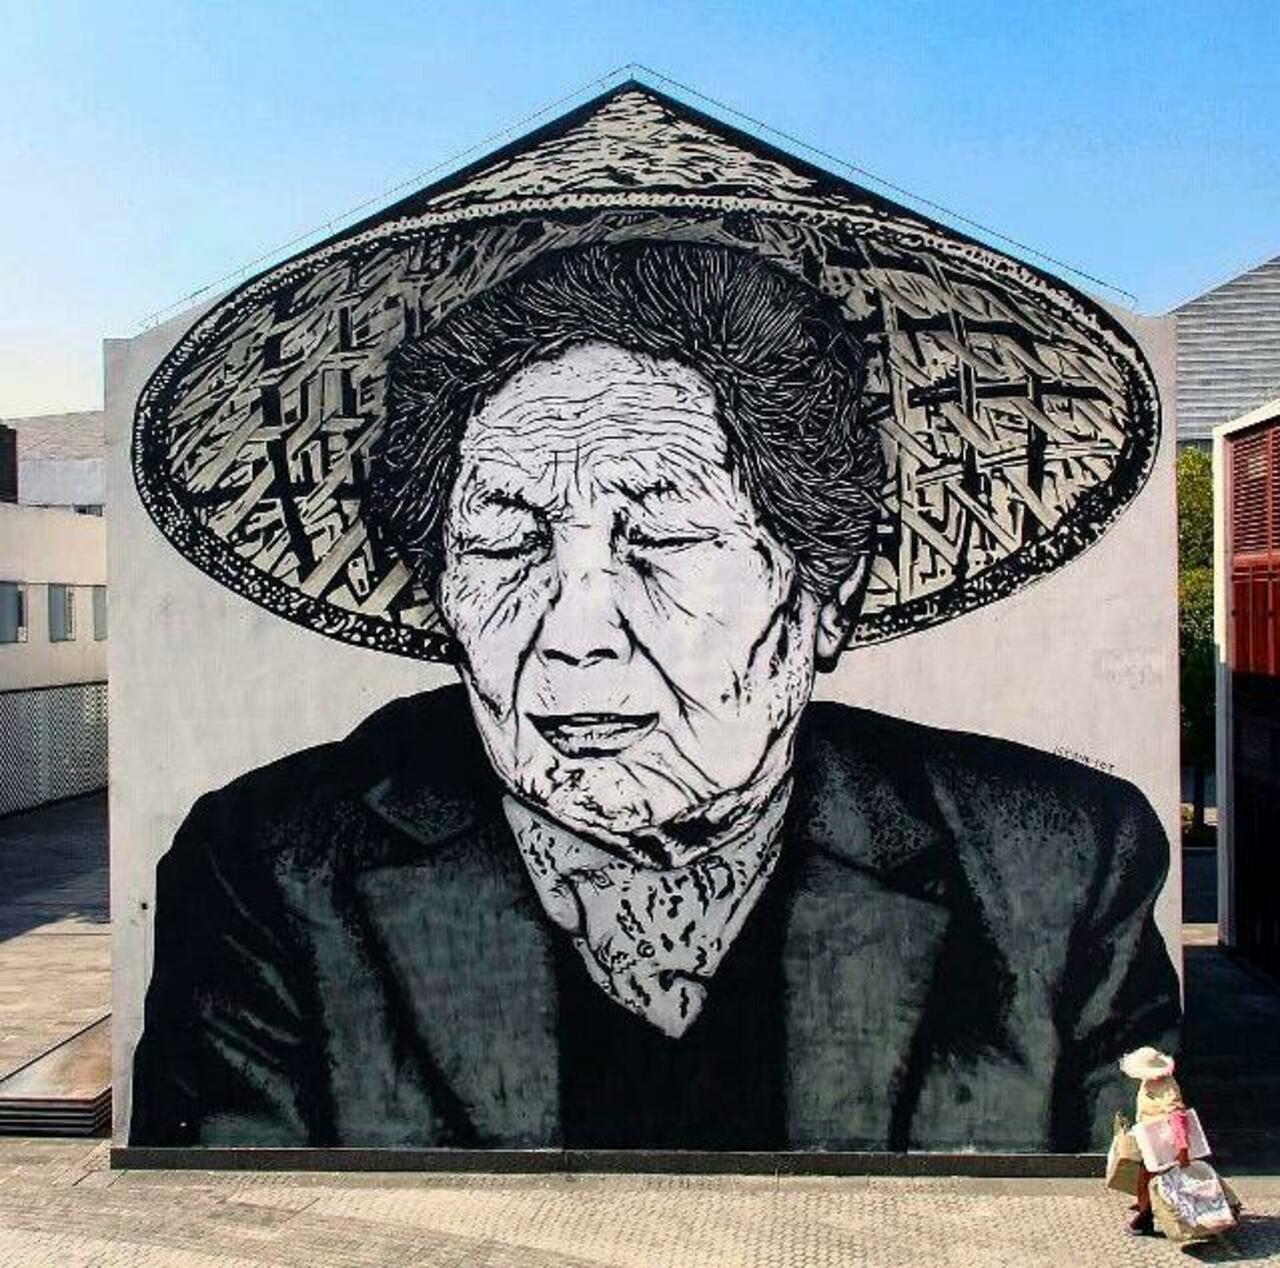 RT belilac "New Street Art by icy&sot in Shanghai  

#art #graffiti #mural #streetart http://t.co/X6HQHn92ua"